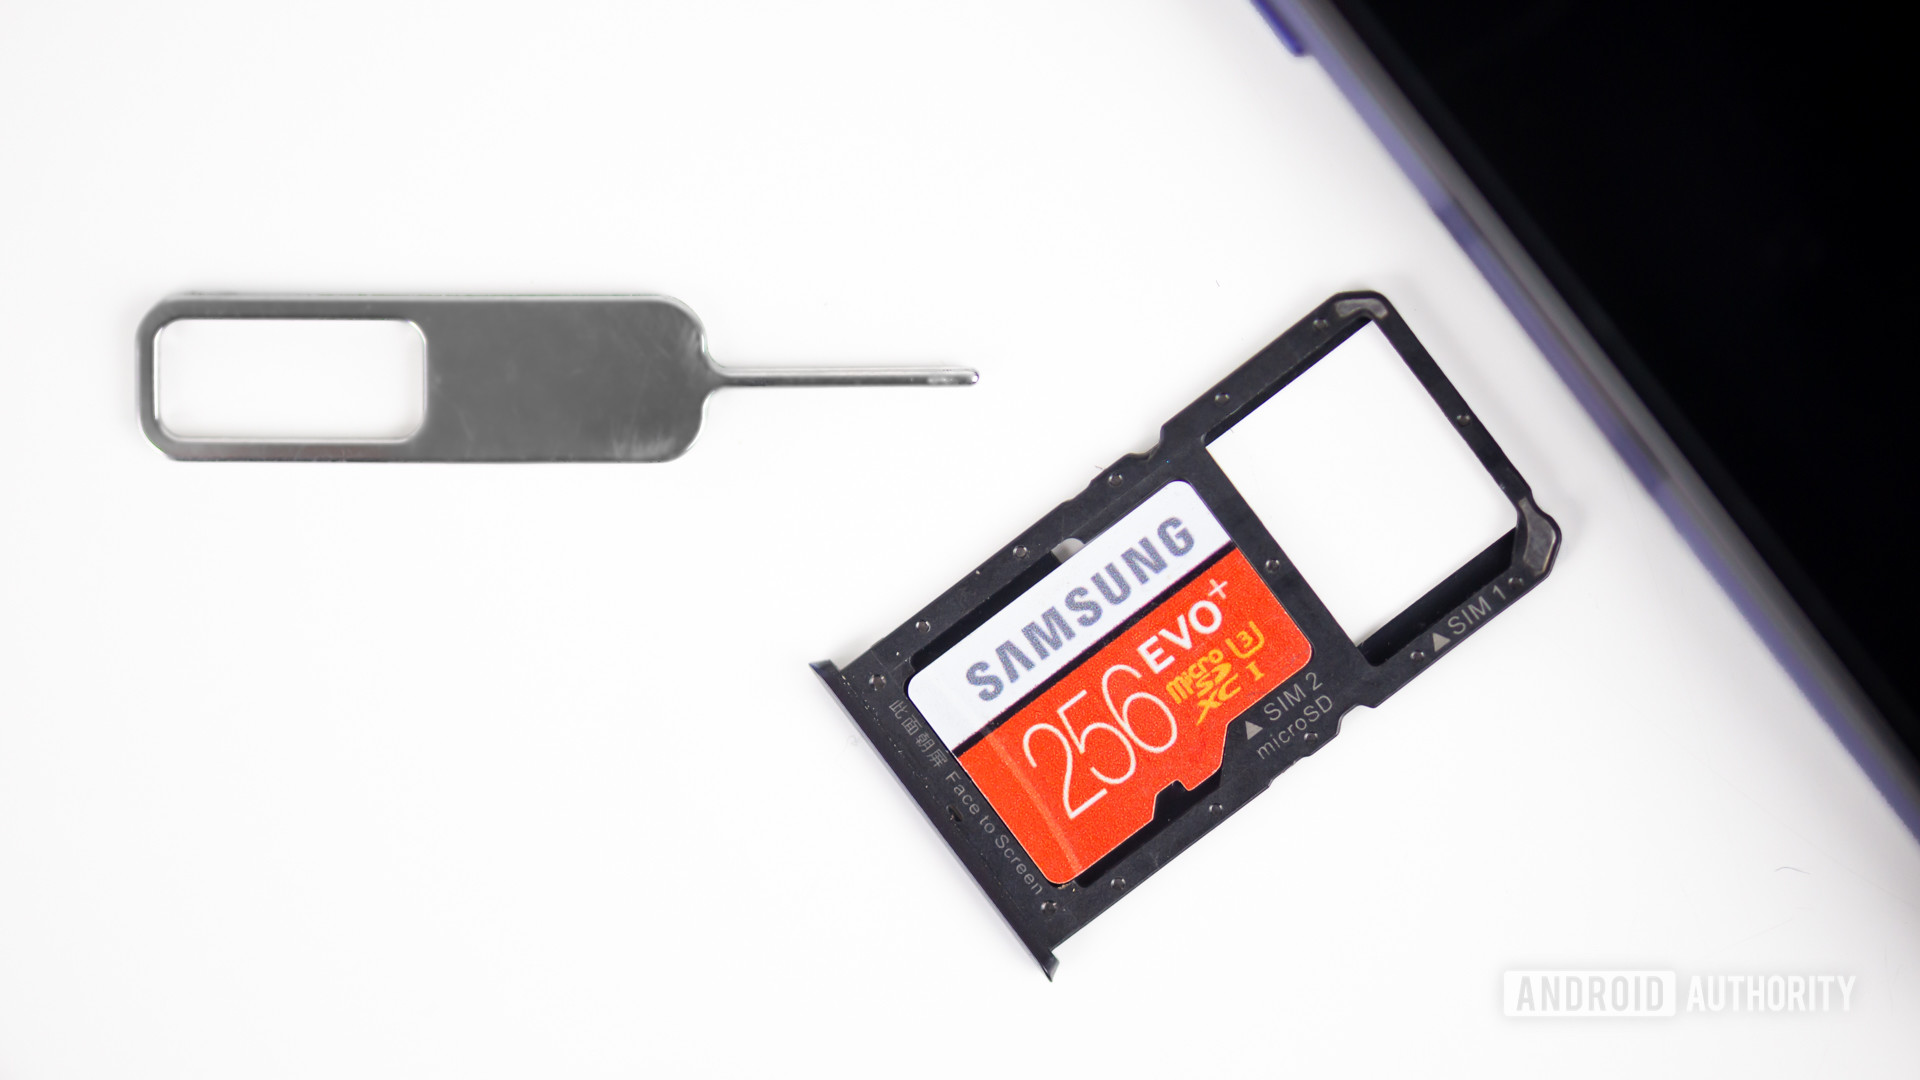 MicroSD card slot stock photo 5